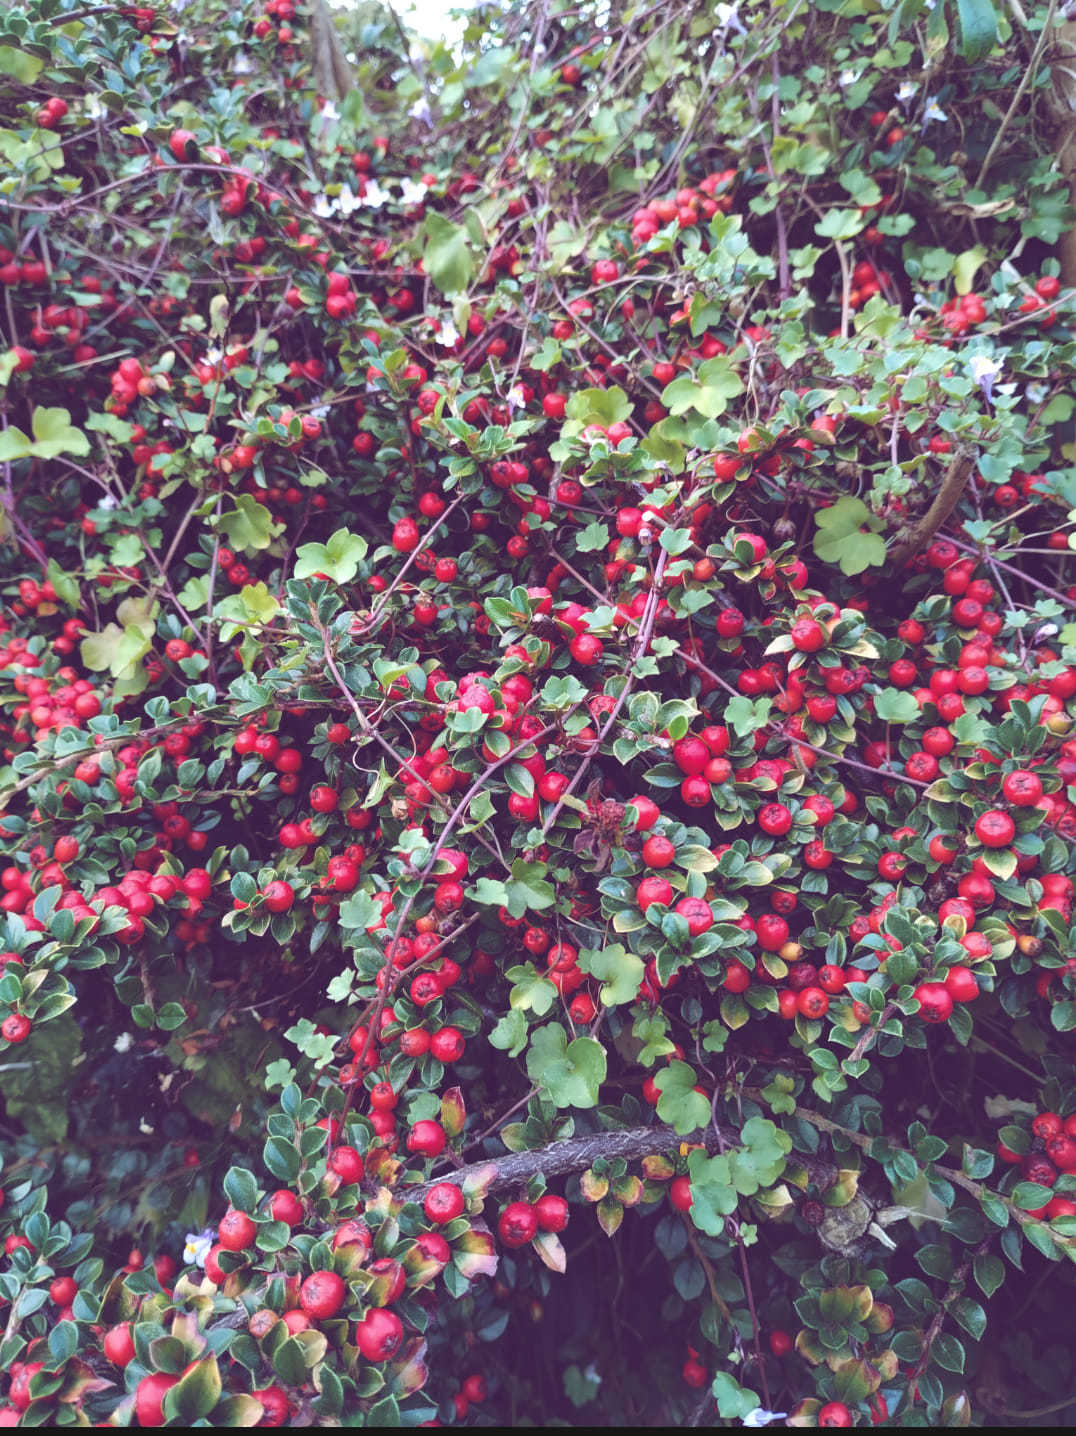 Autumn berries by Jen Hill